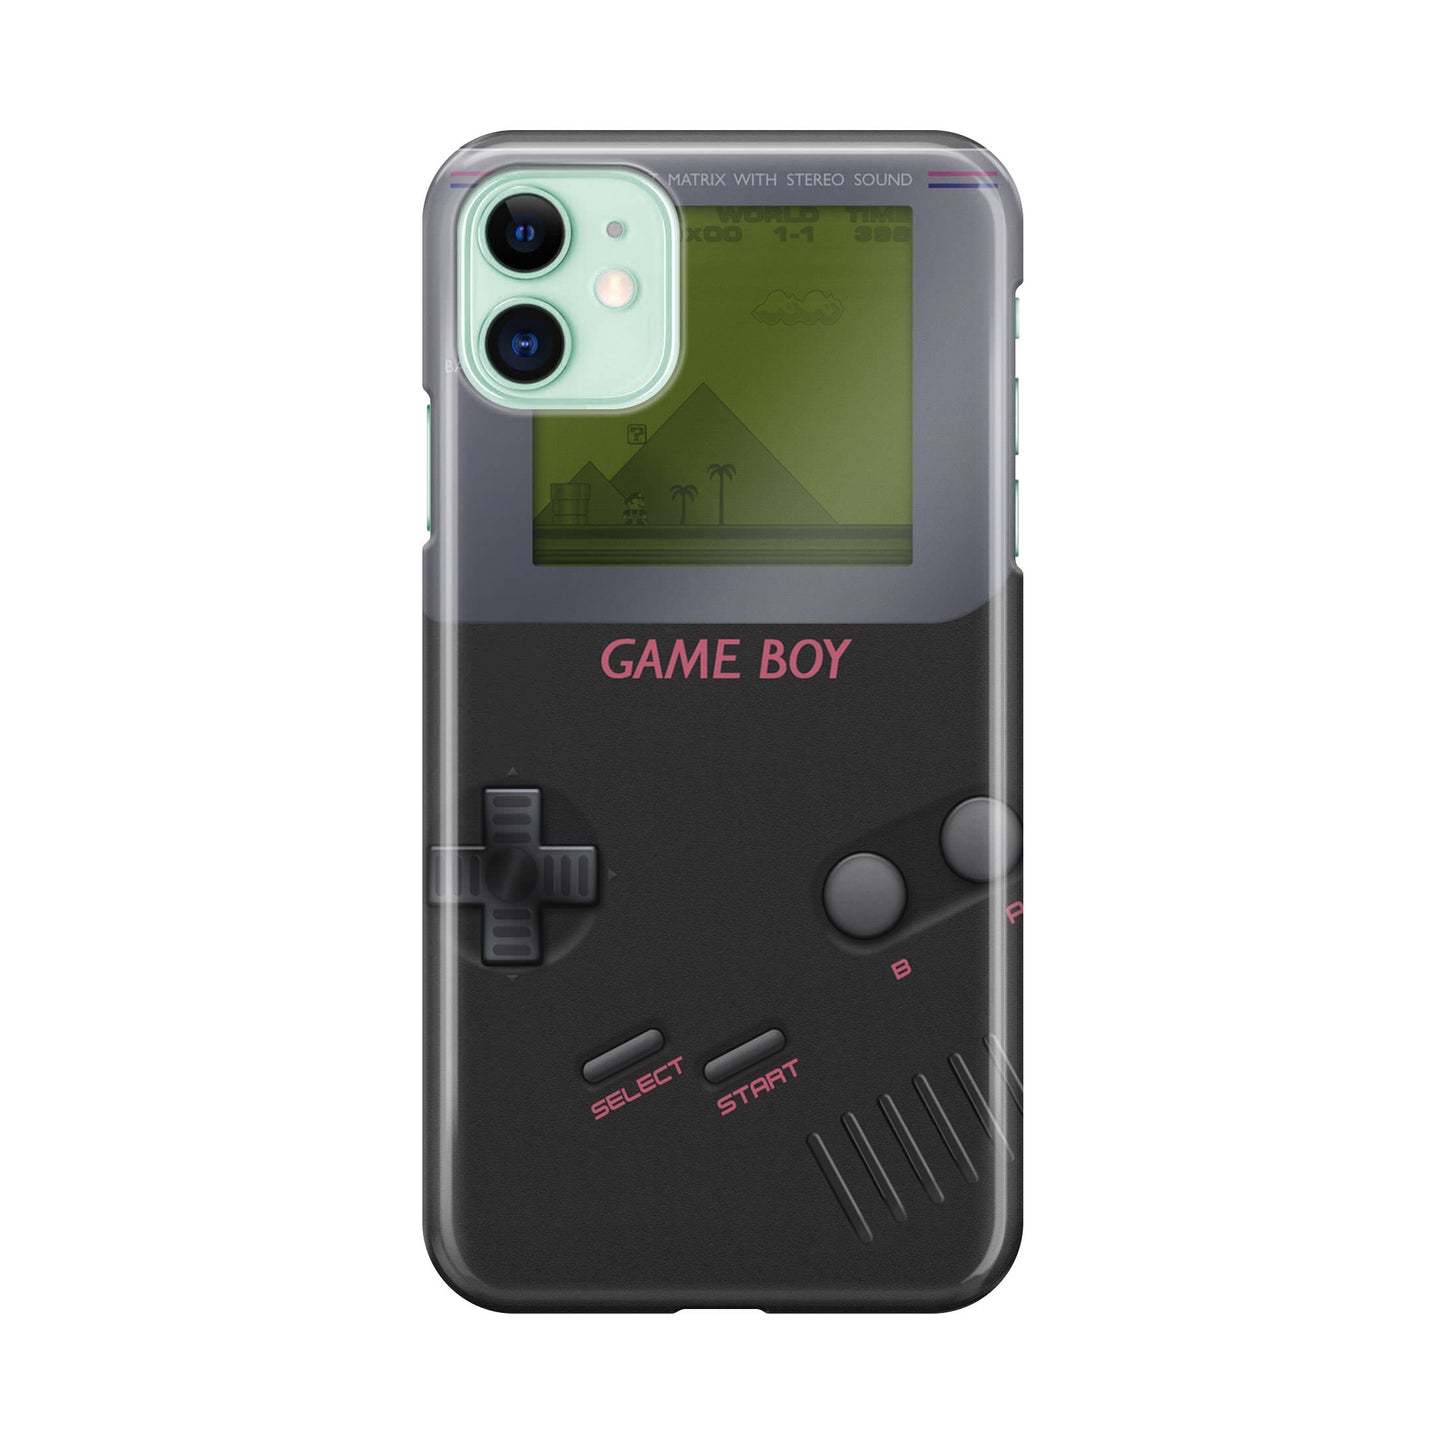 Game Boy Black Model iPhone 12 mini Case